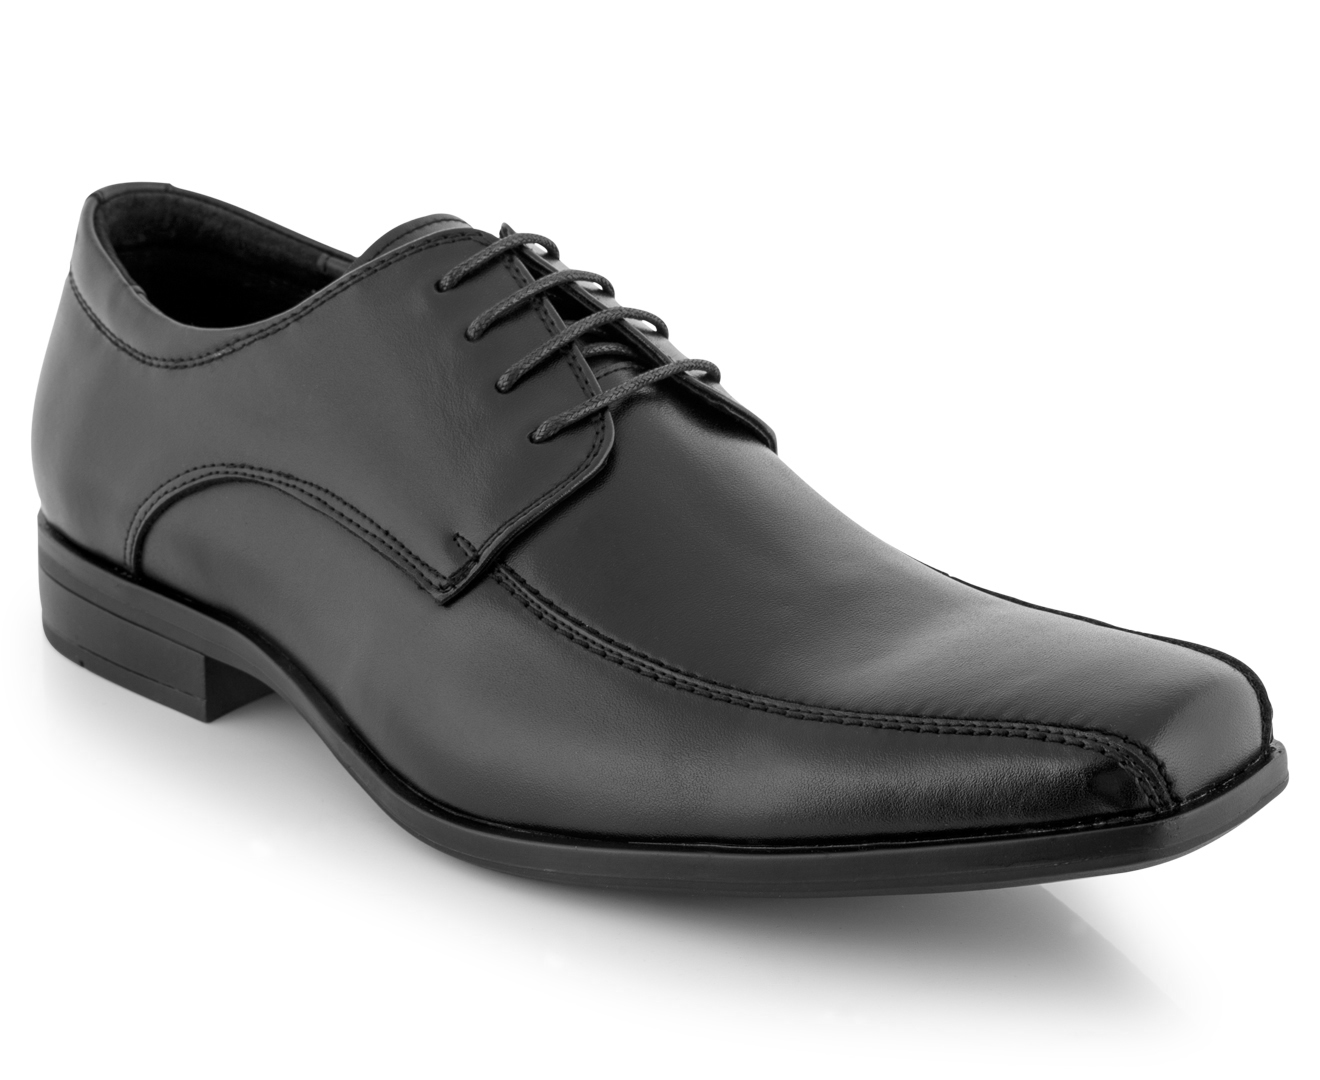 Julius Marlow Men's Reef Shoes - Black